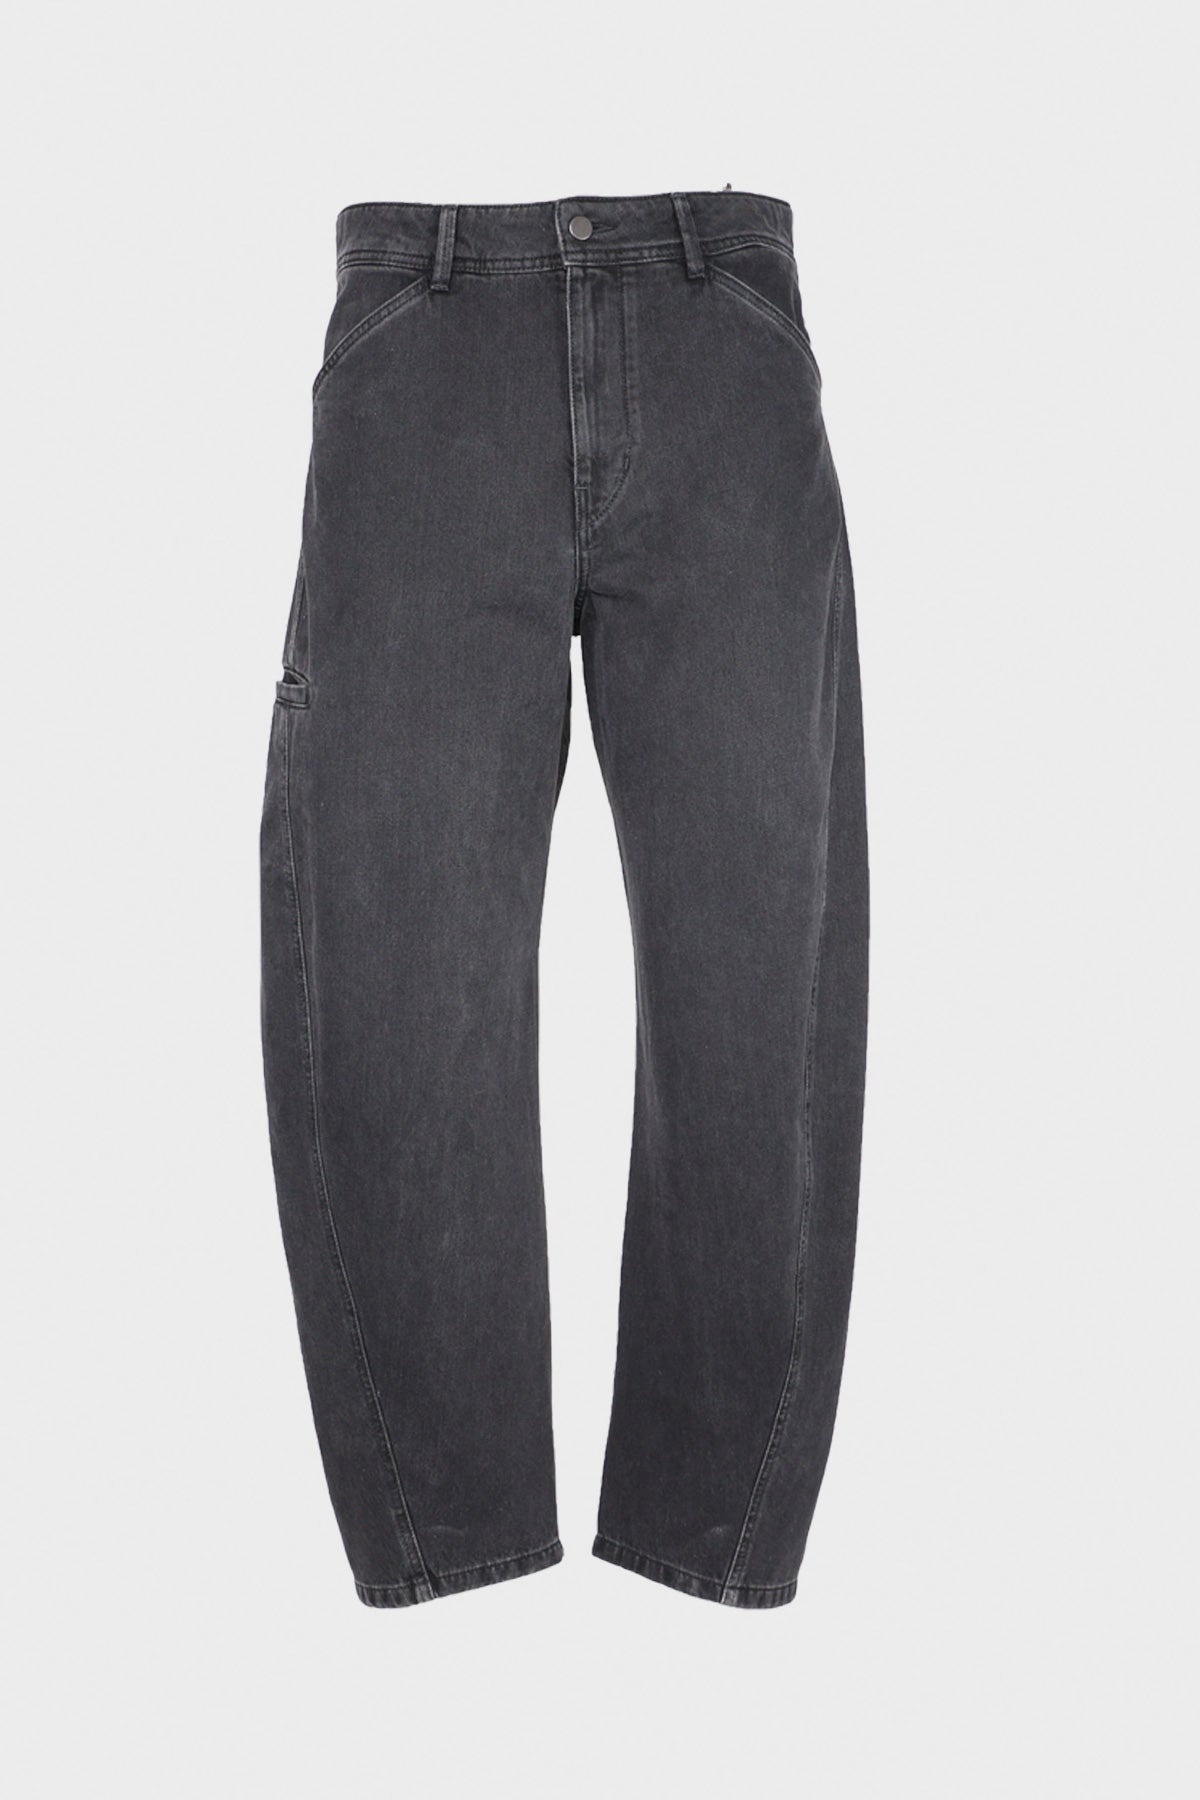 Twisted Workwear Pants - Denim Soft Bleached Black - 1